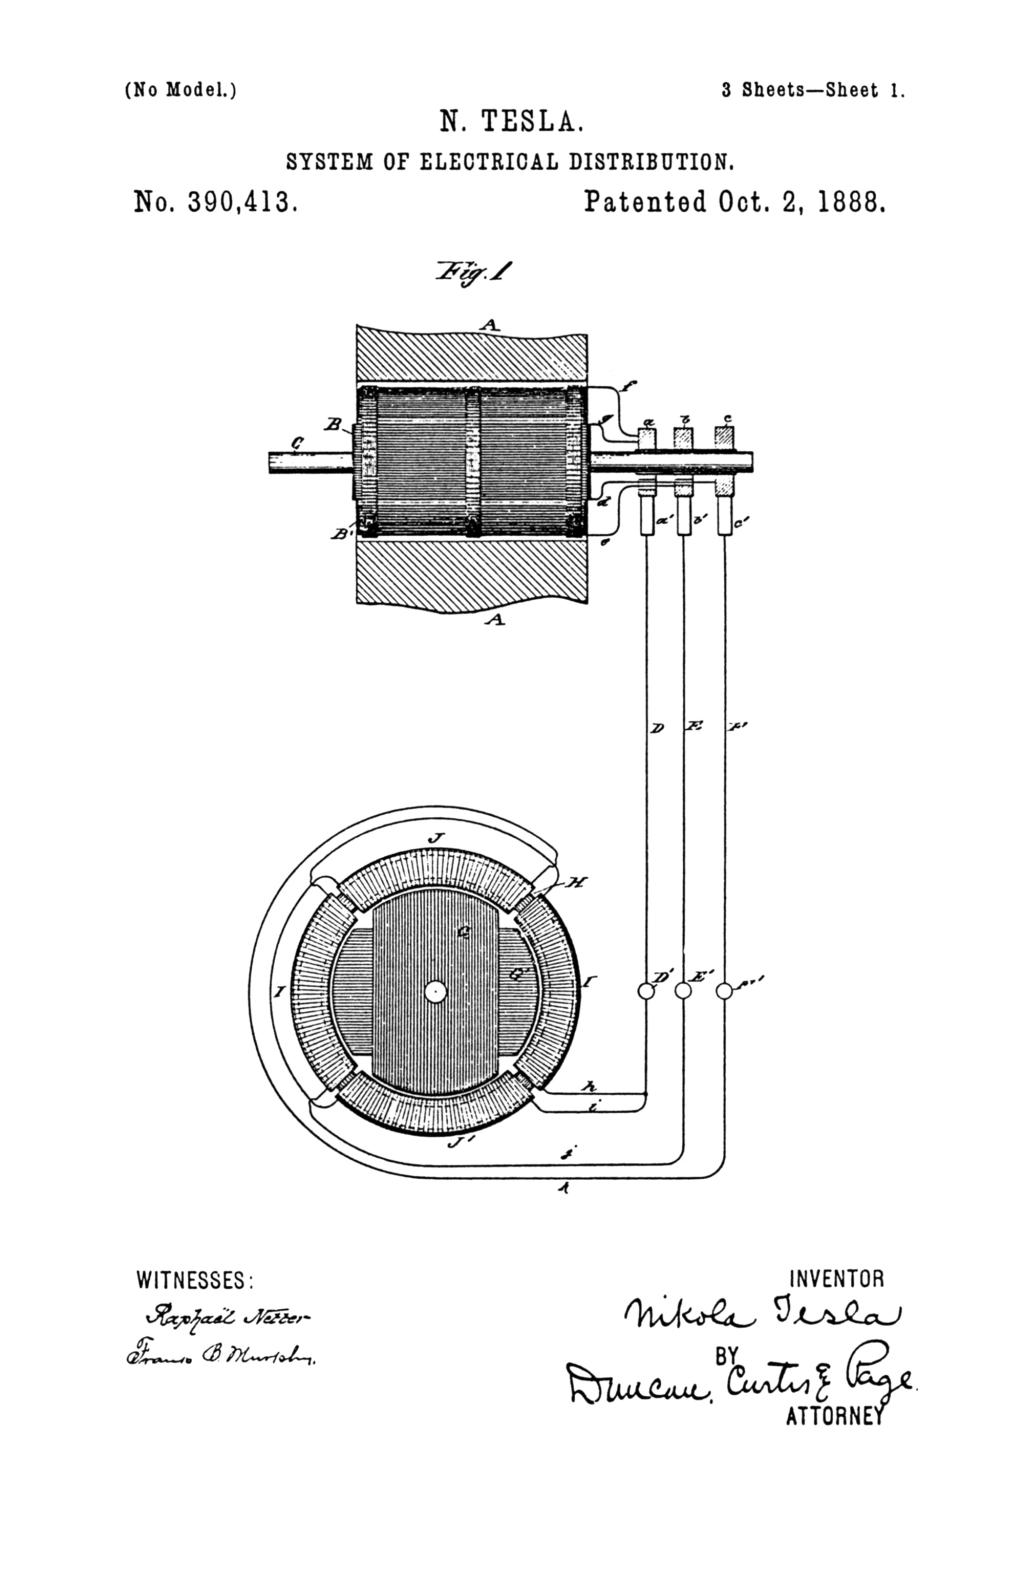 Nikola Tesla U.S. Patent 390,413 - System of Electrical Distribution - Image 1